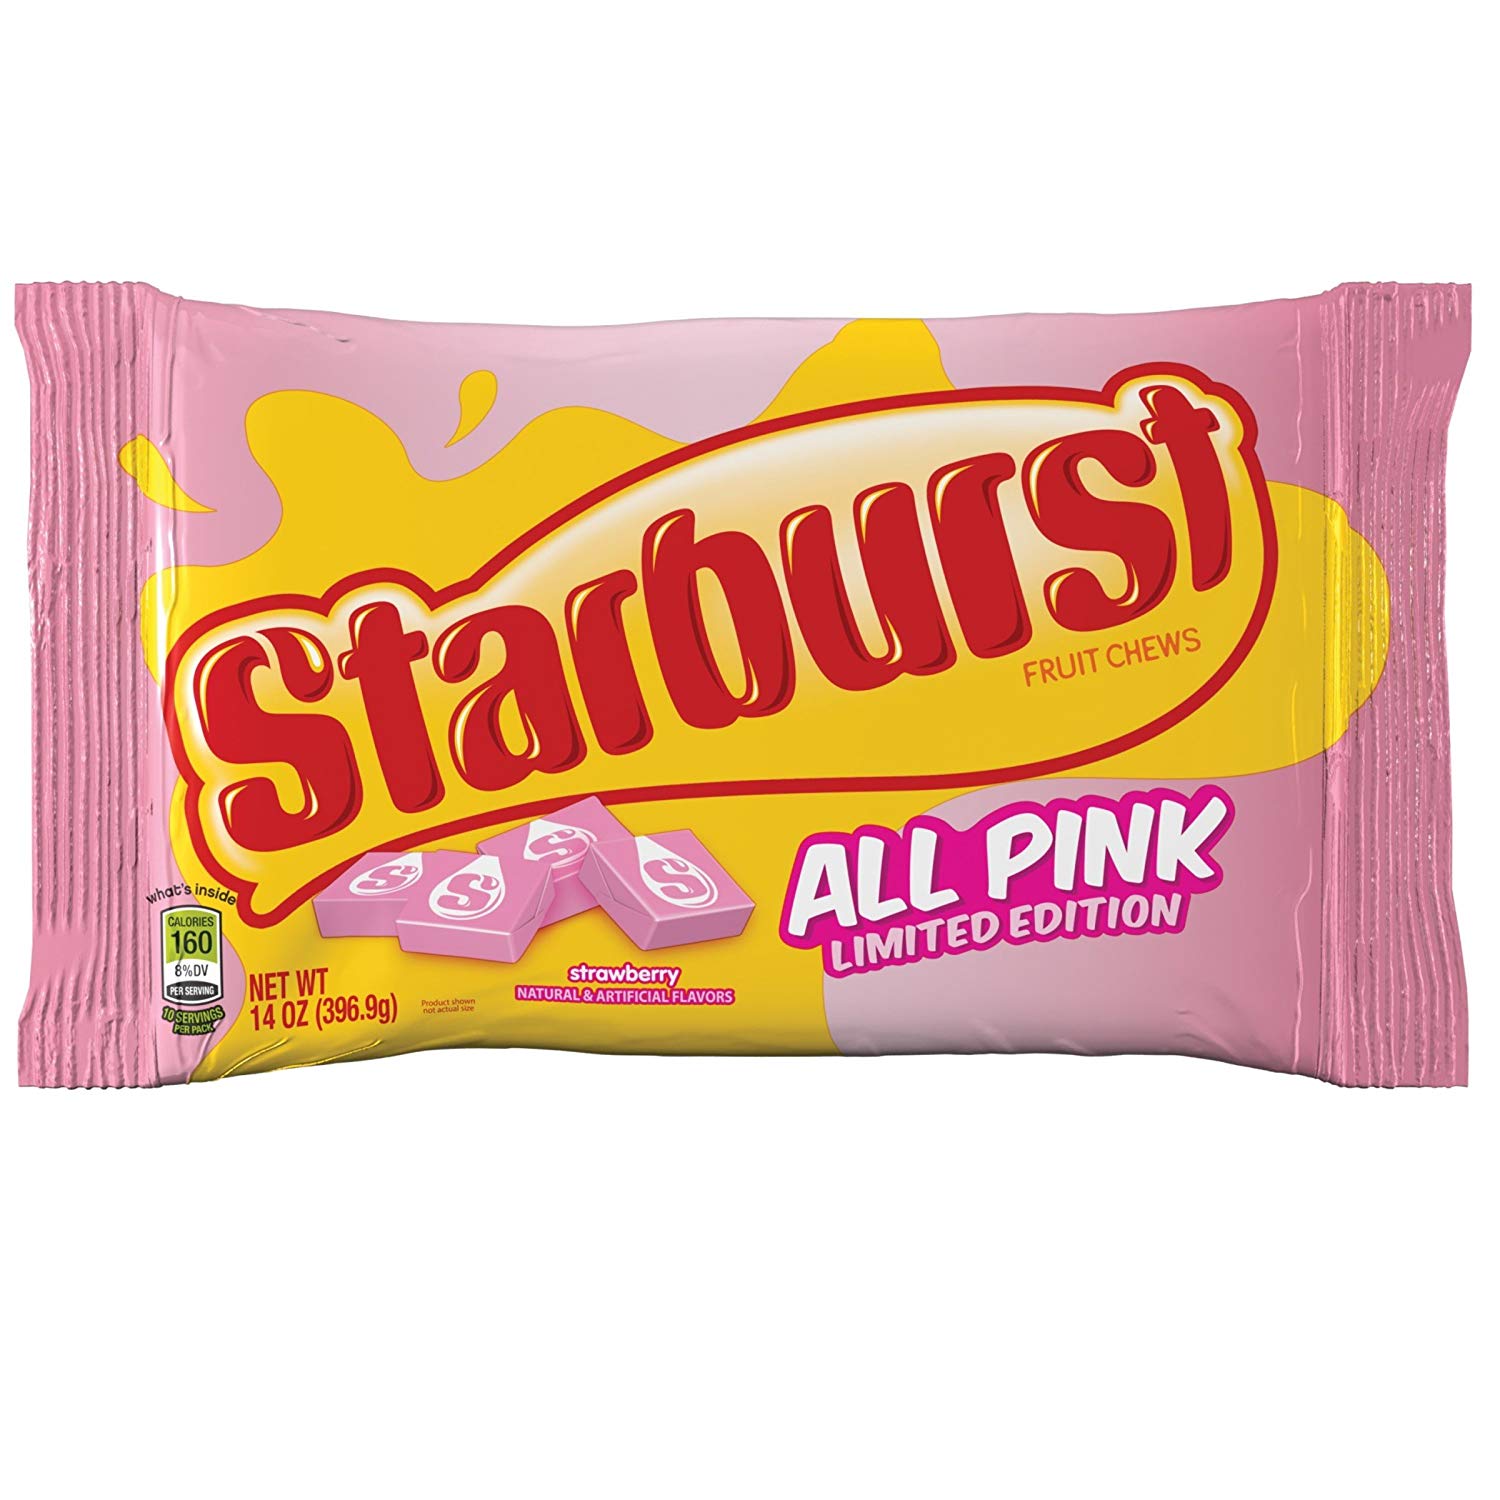 Starburst all pink strawberry